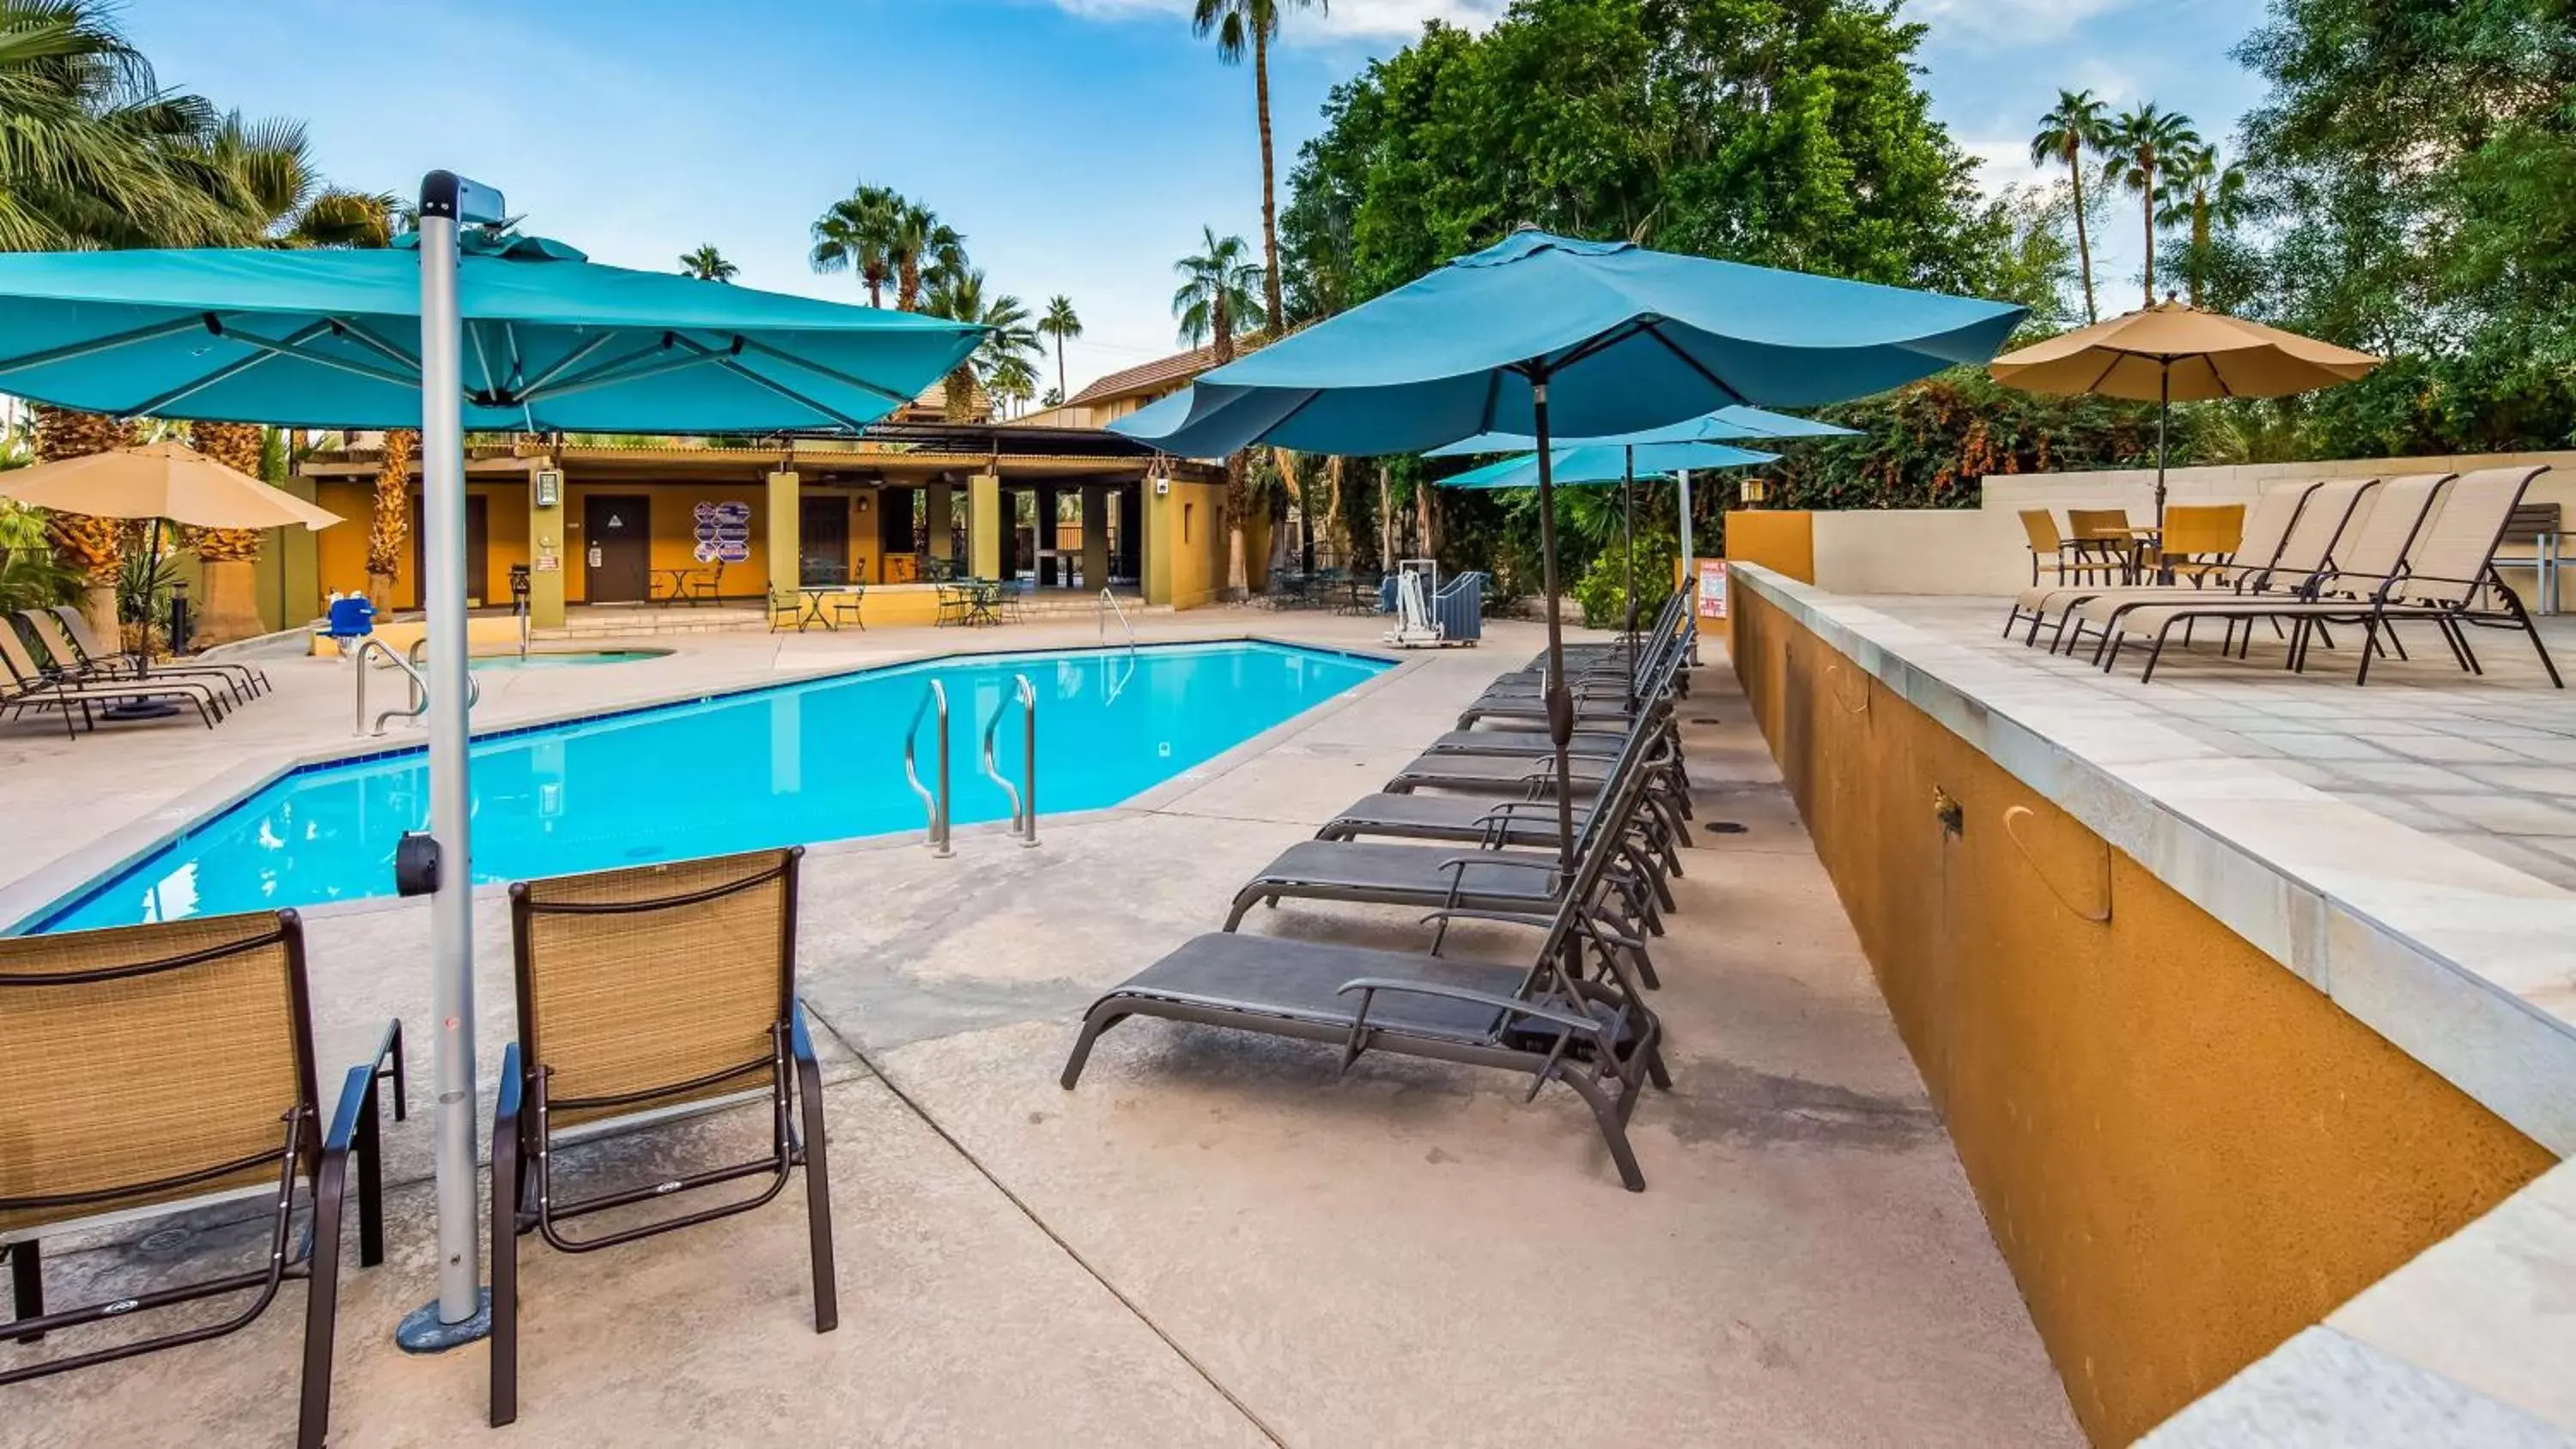 On site, Swimming Pool in Best Western Inn at Palm Springs